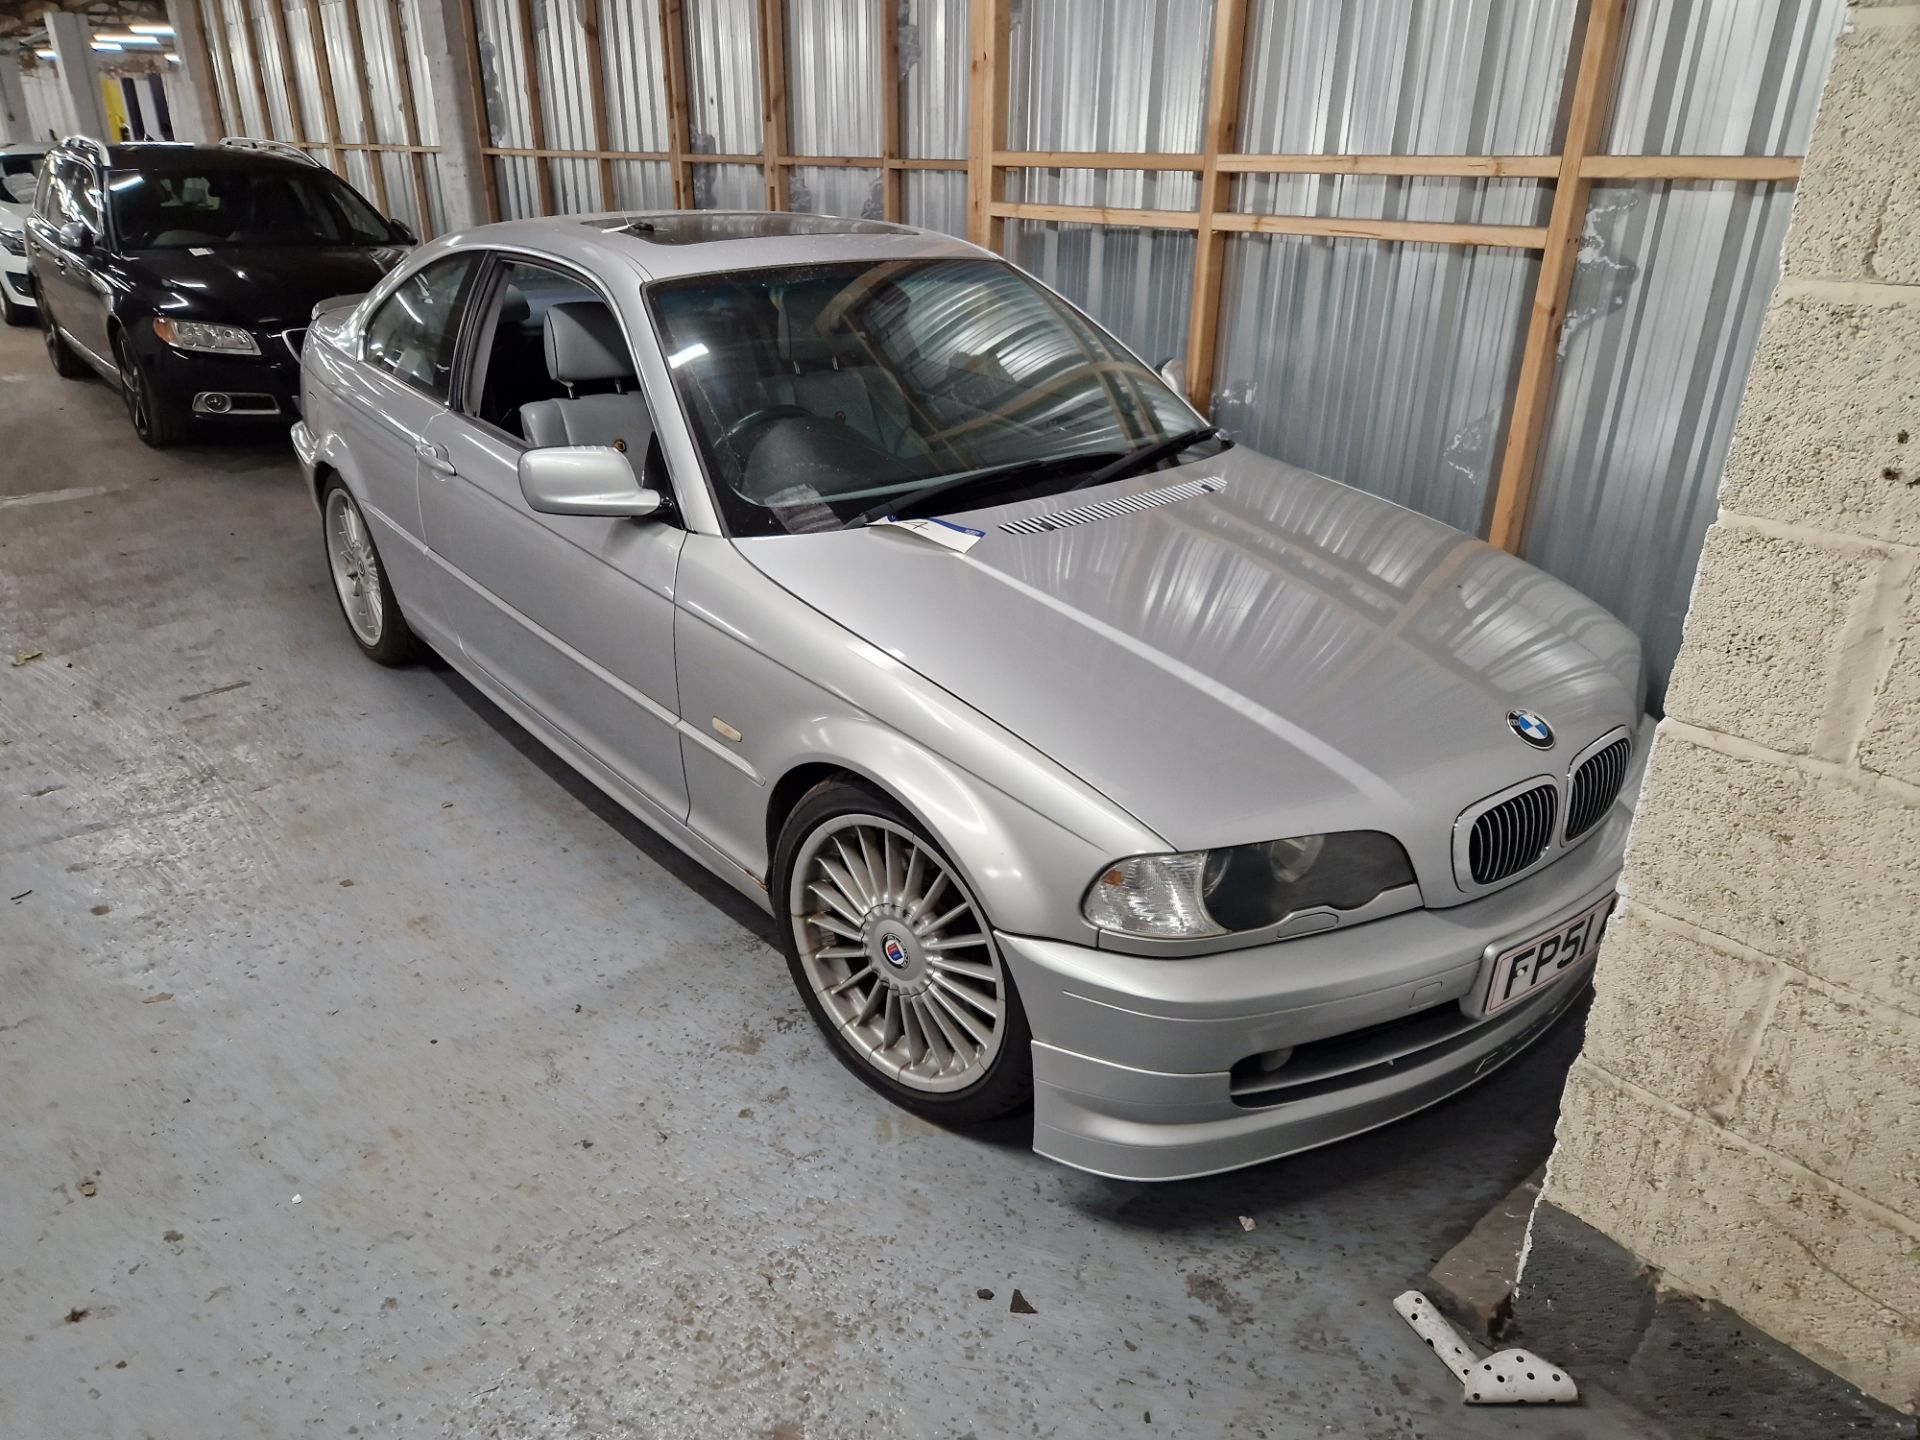 BMW Alpina B3 3.3 Saloon, Registration No. FP51 AOL, Mileage 138,000 (Estimate at time of